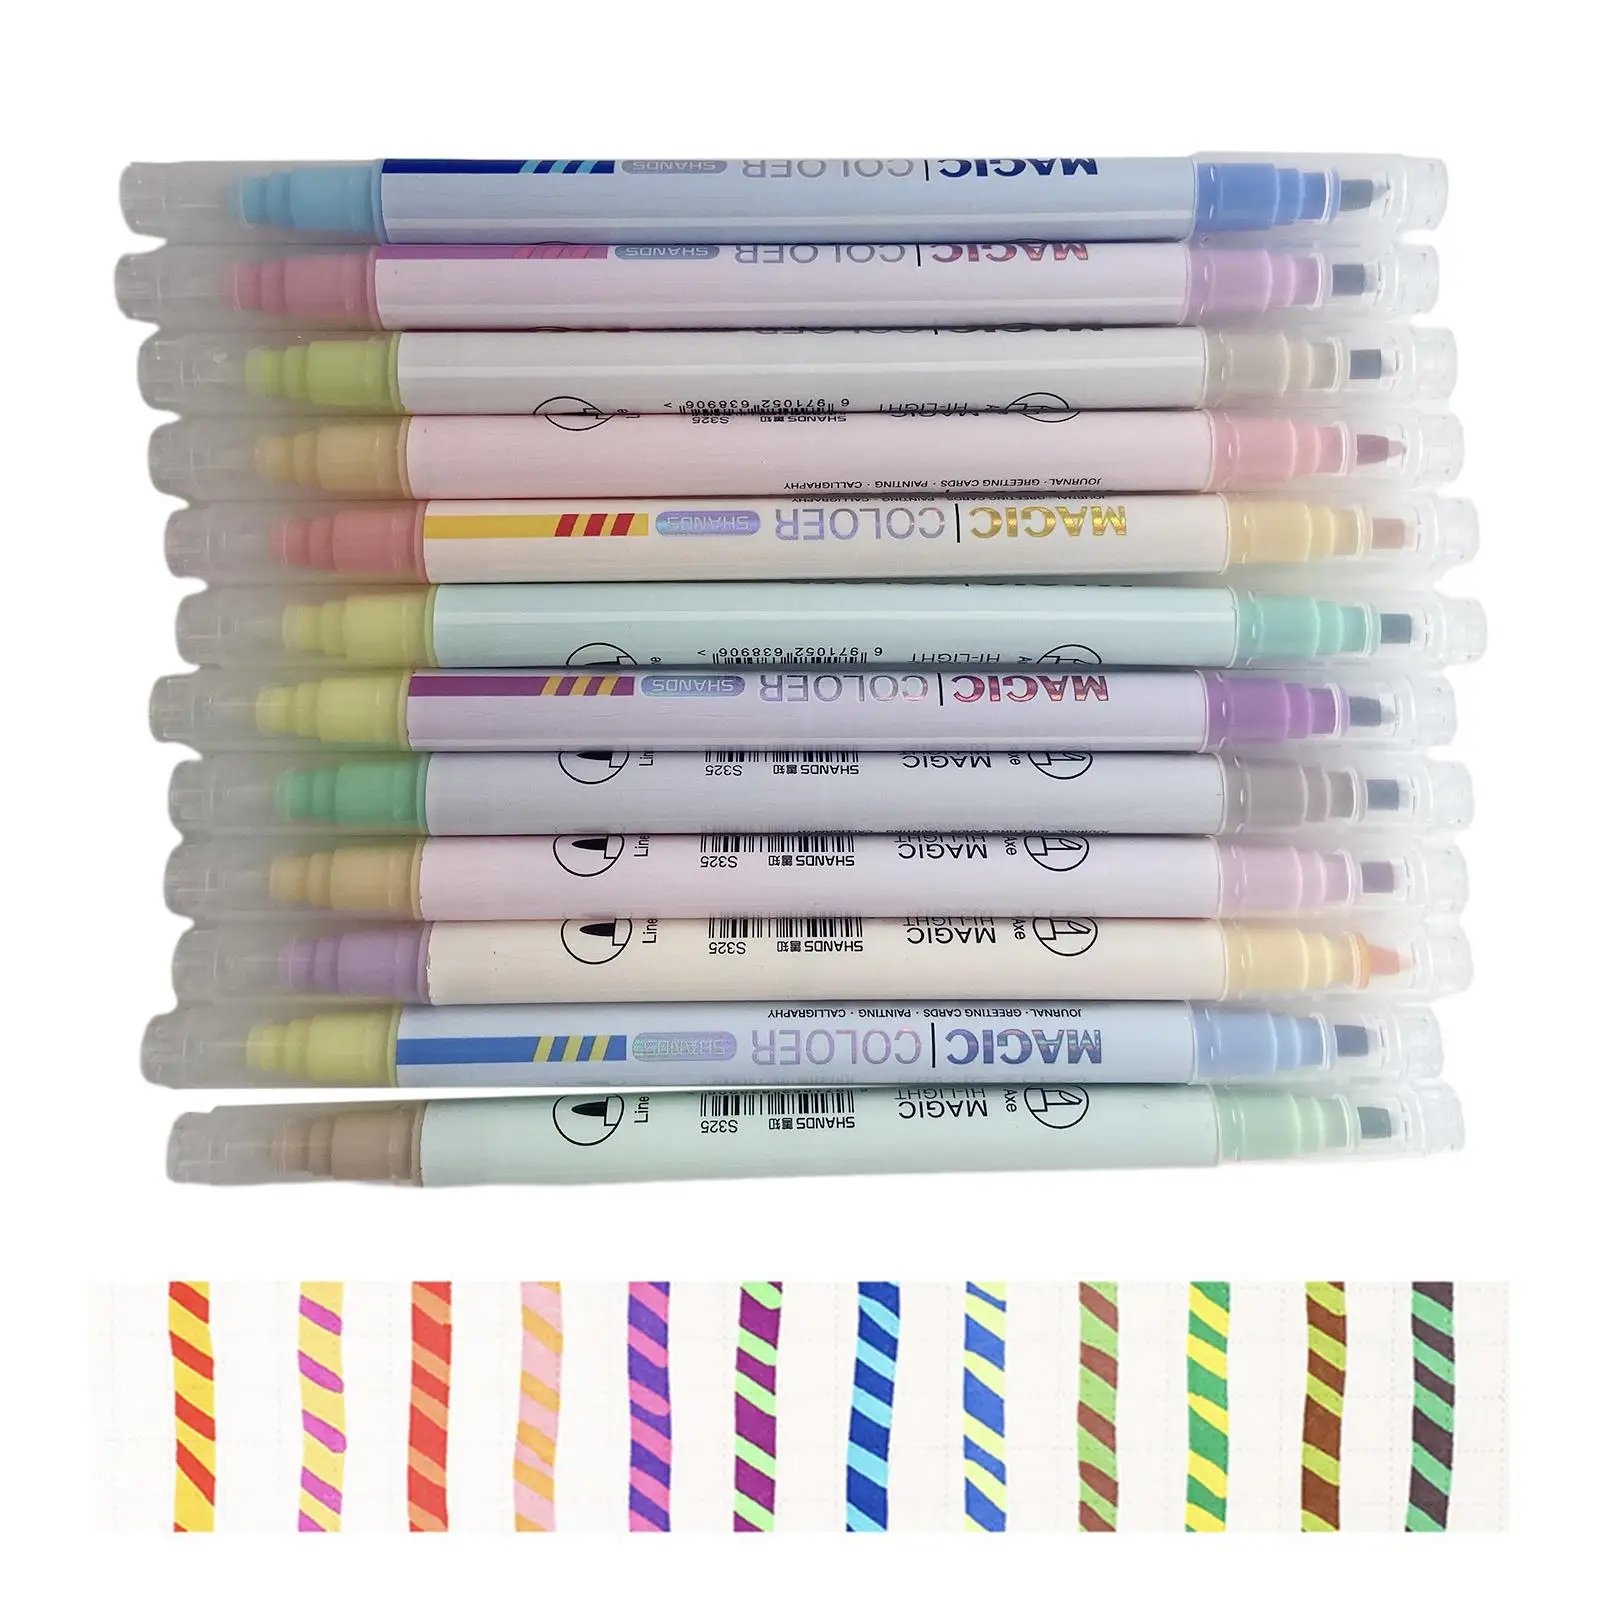 12x Marker Pens Highlighter Pen Portable Office Supplies Double Tip for Drawing Art Project Diaries Journaling Calendar Doodling